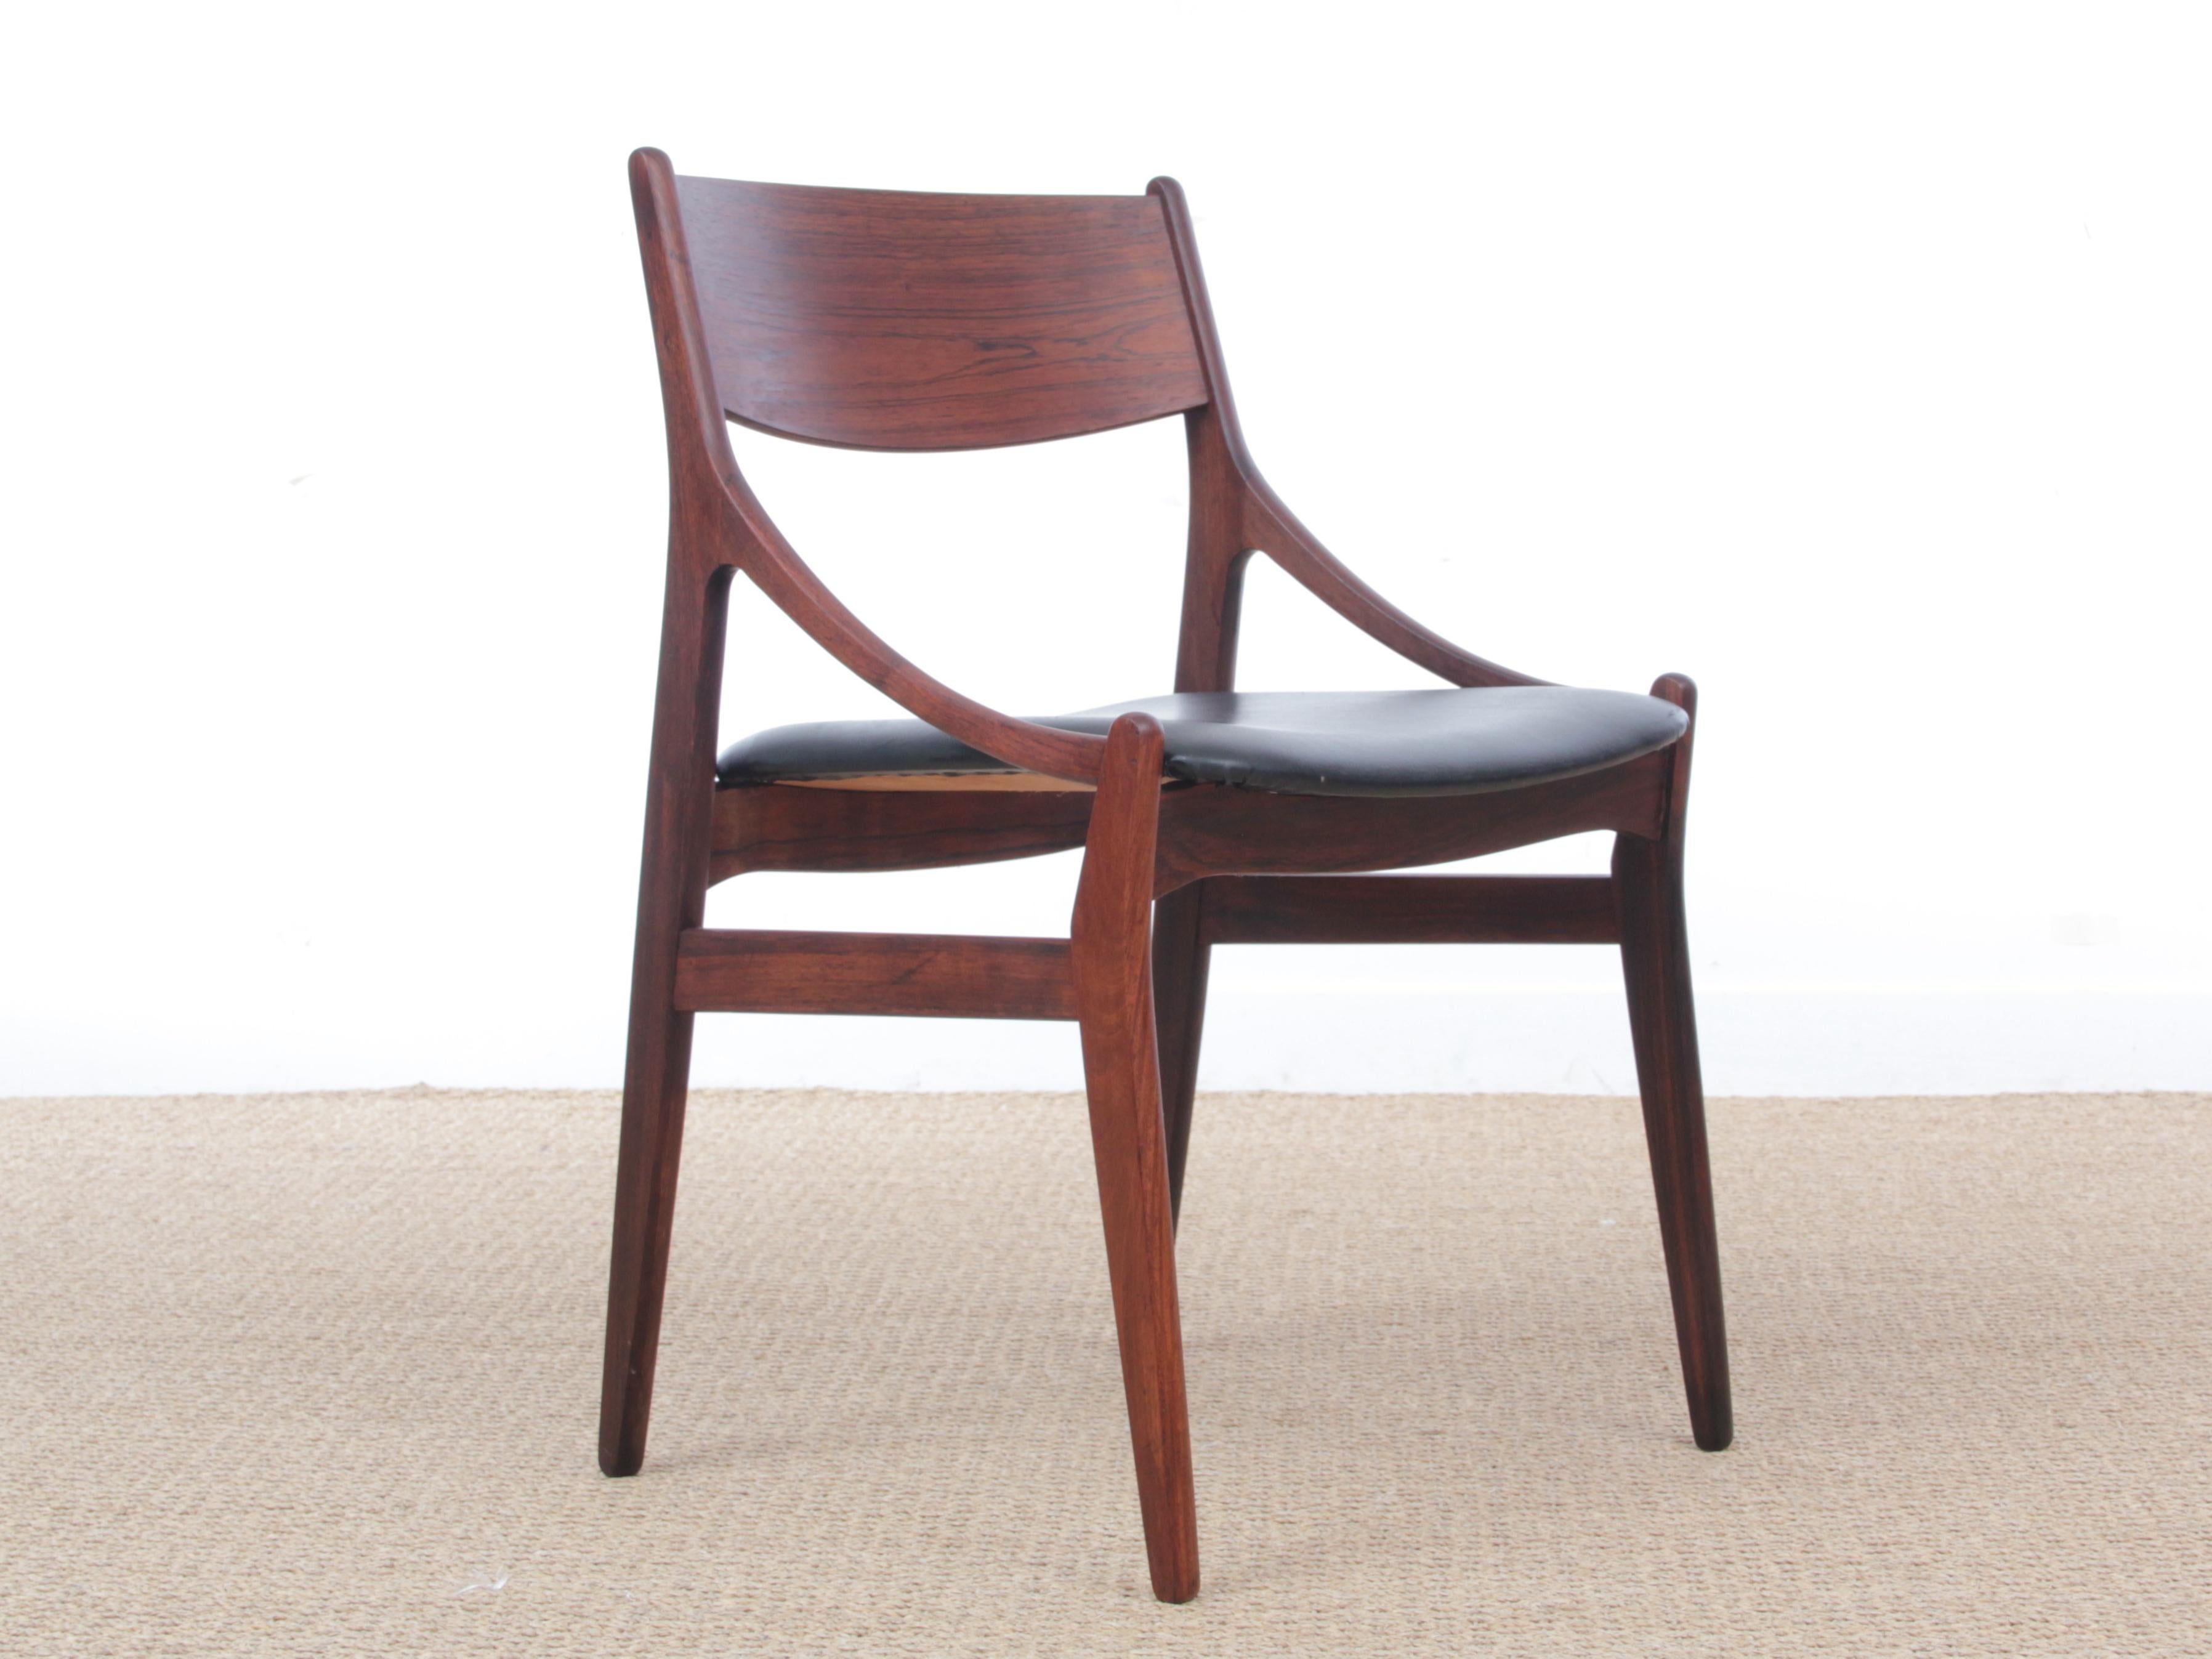 Scandinavian Modern Set of 4 Mid-Century Modern Scandinavian Chairs in Rosewood by H. Eriksen